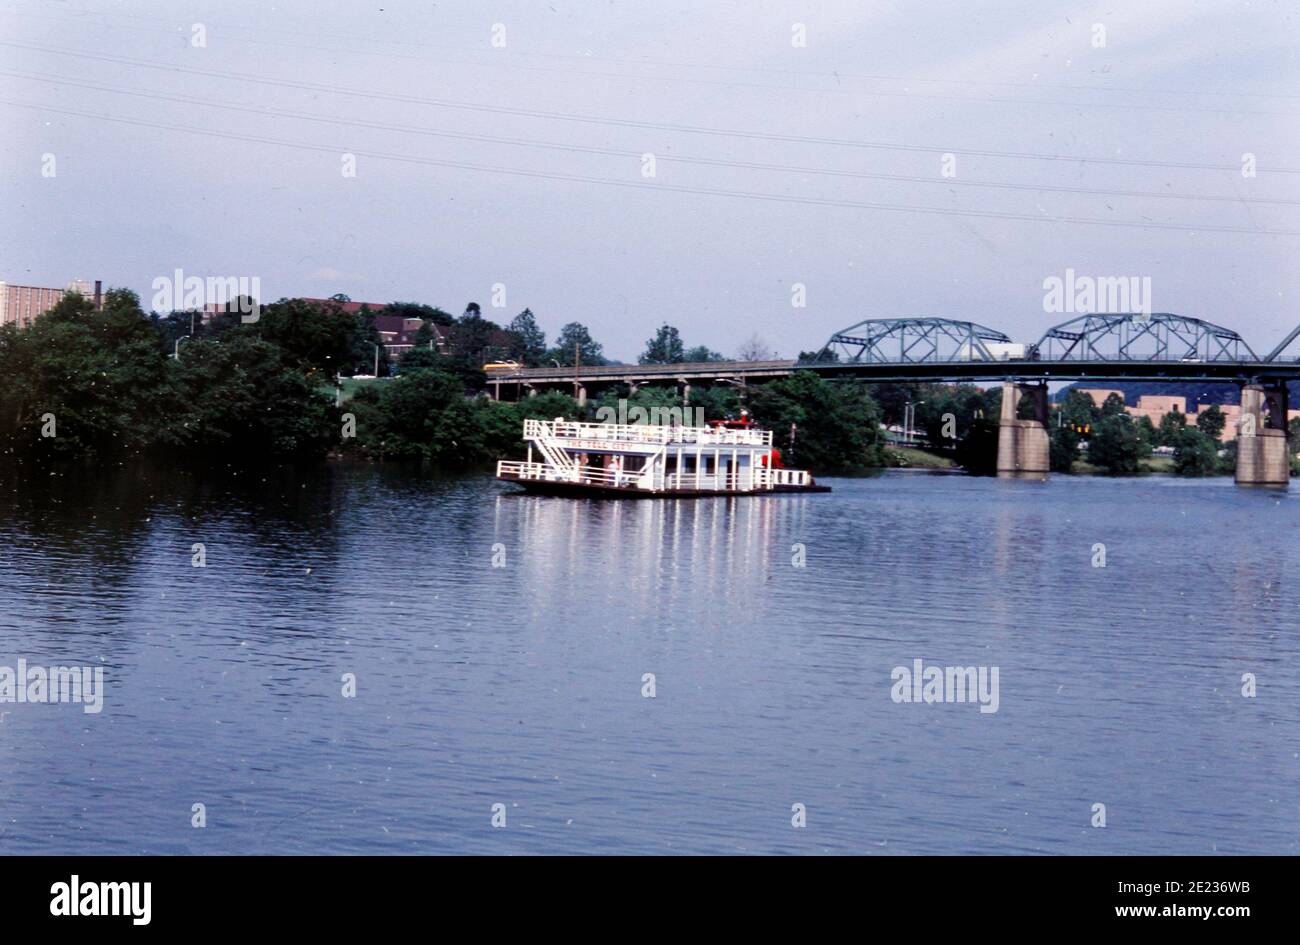 The Tell City Ship on the Ohio River, circa 1975 Stock Photo